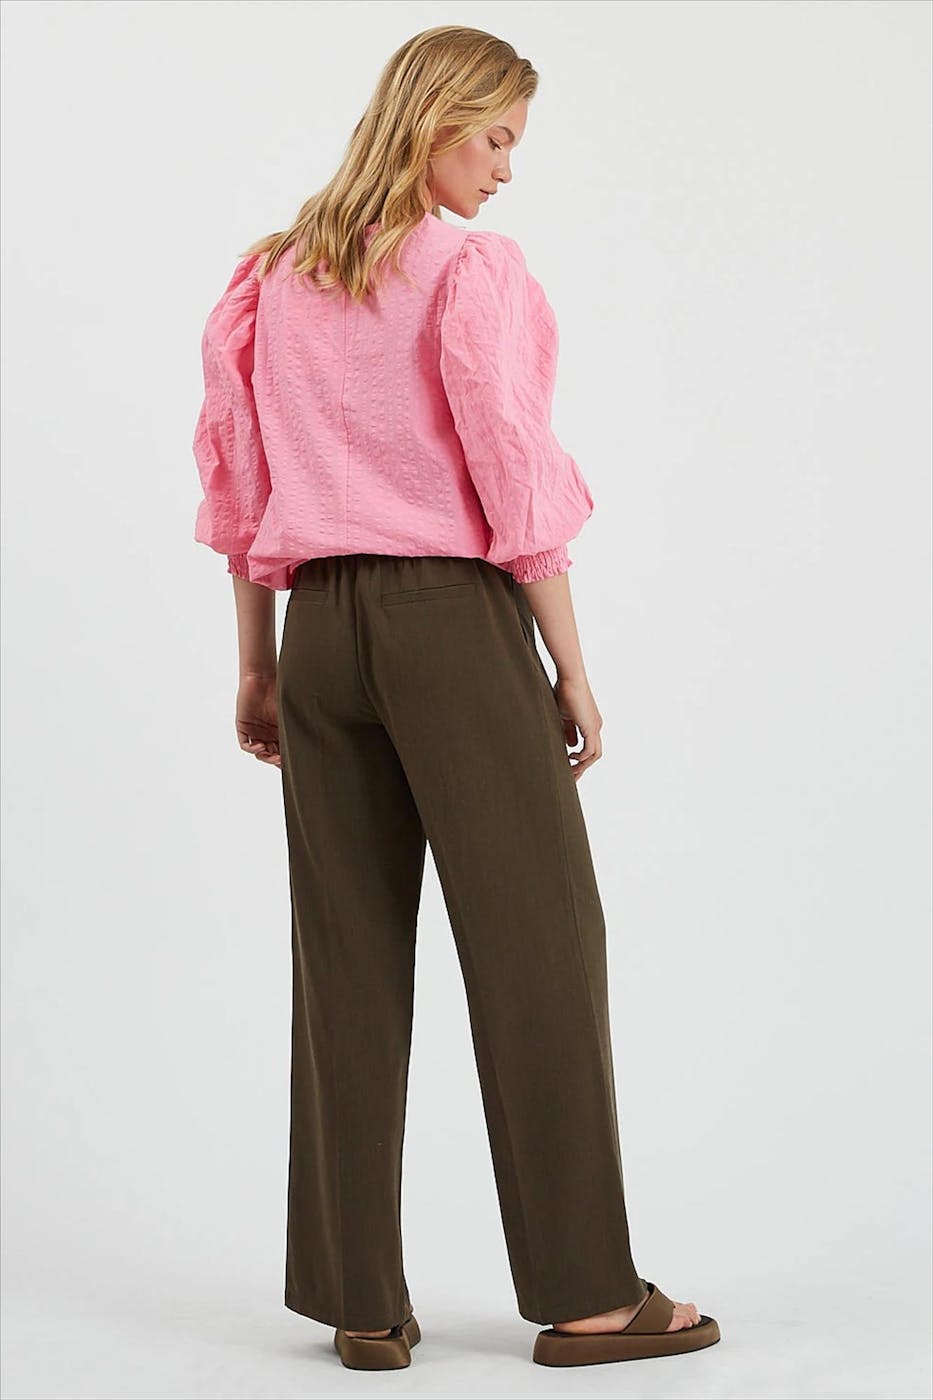 Minimum - Roze Gulli blouse